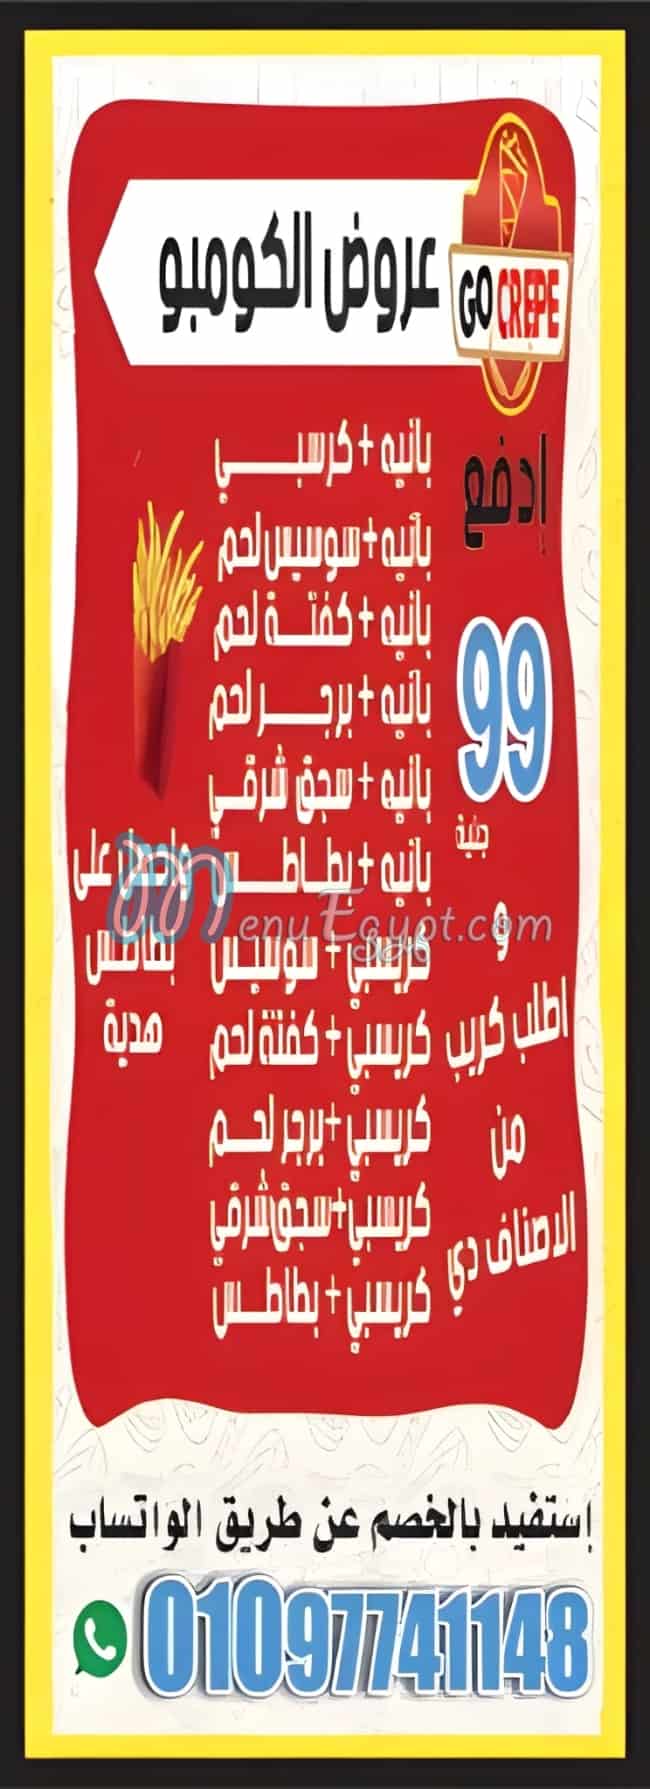 Go Crepe Maadi menu Egypt